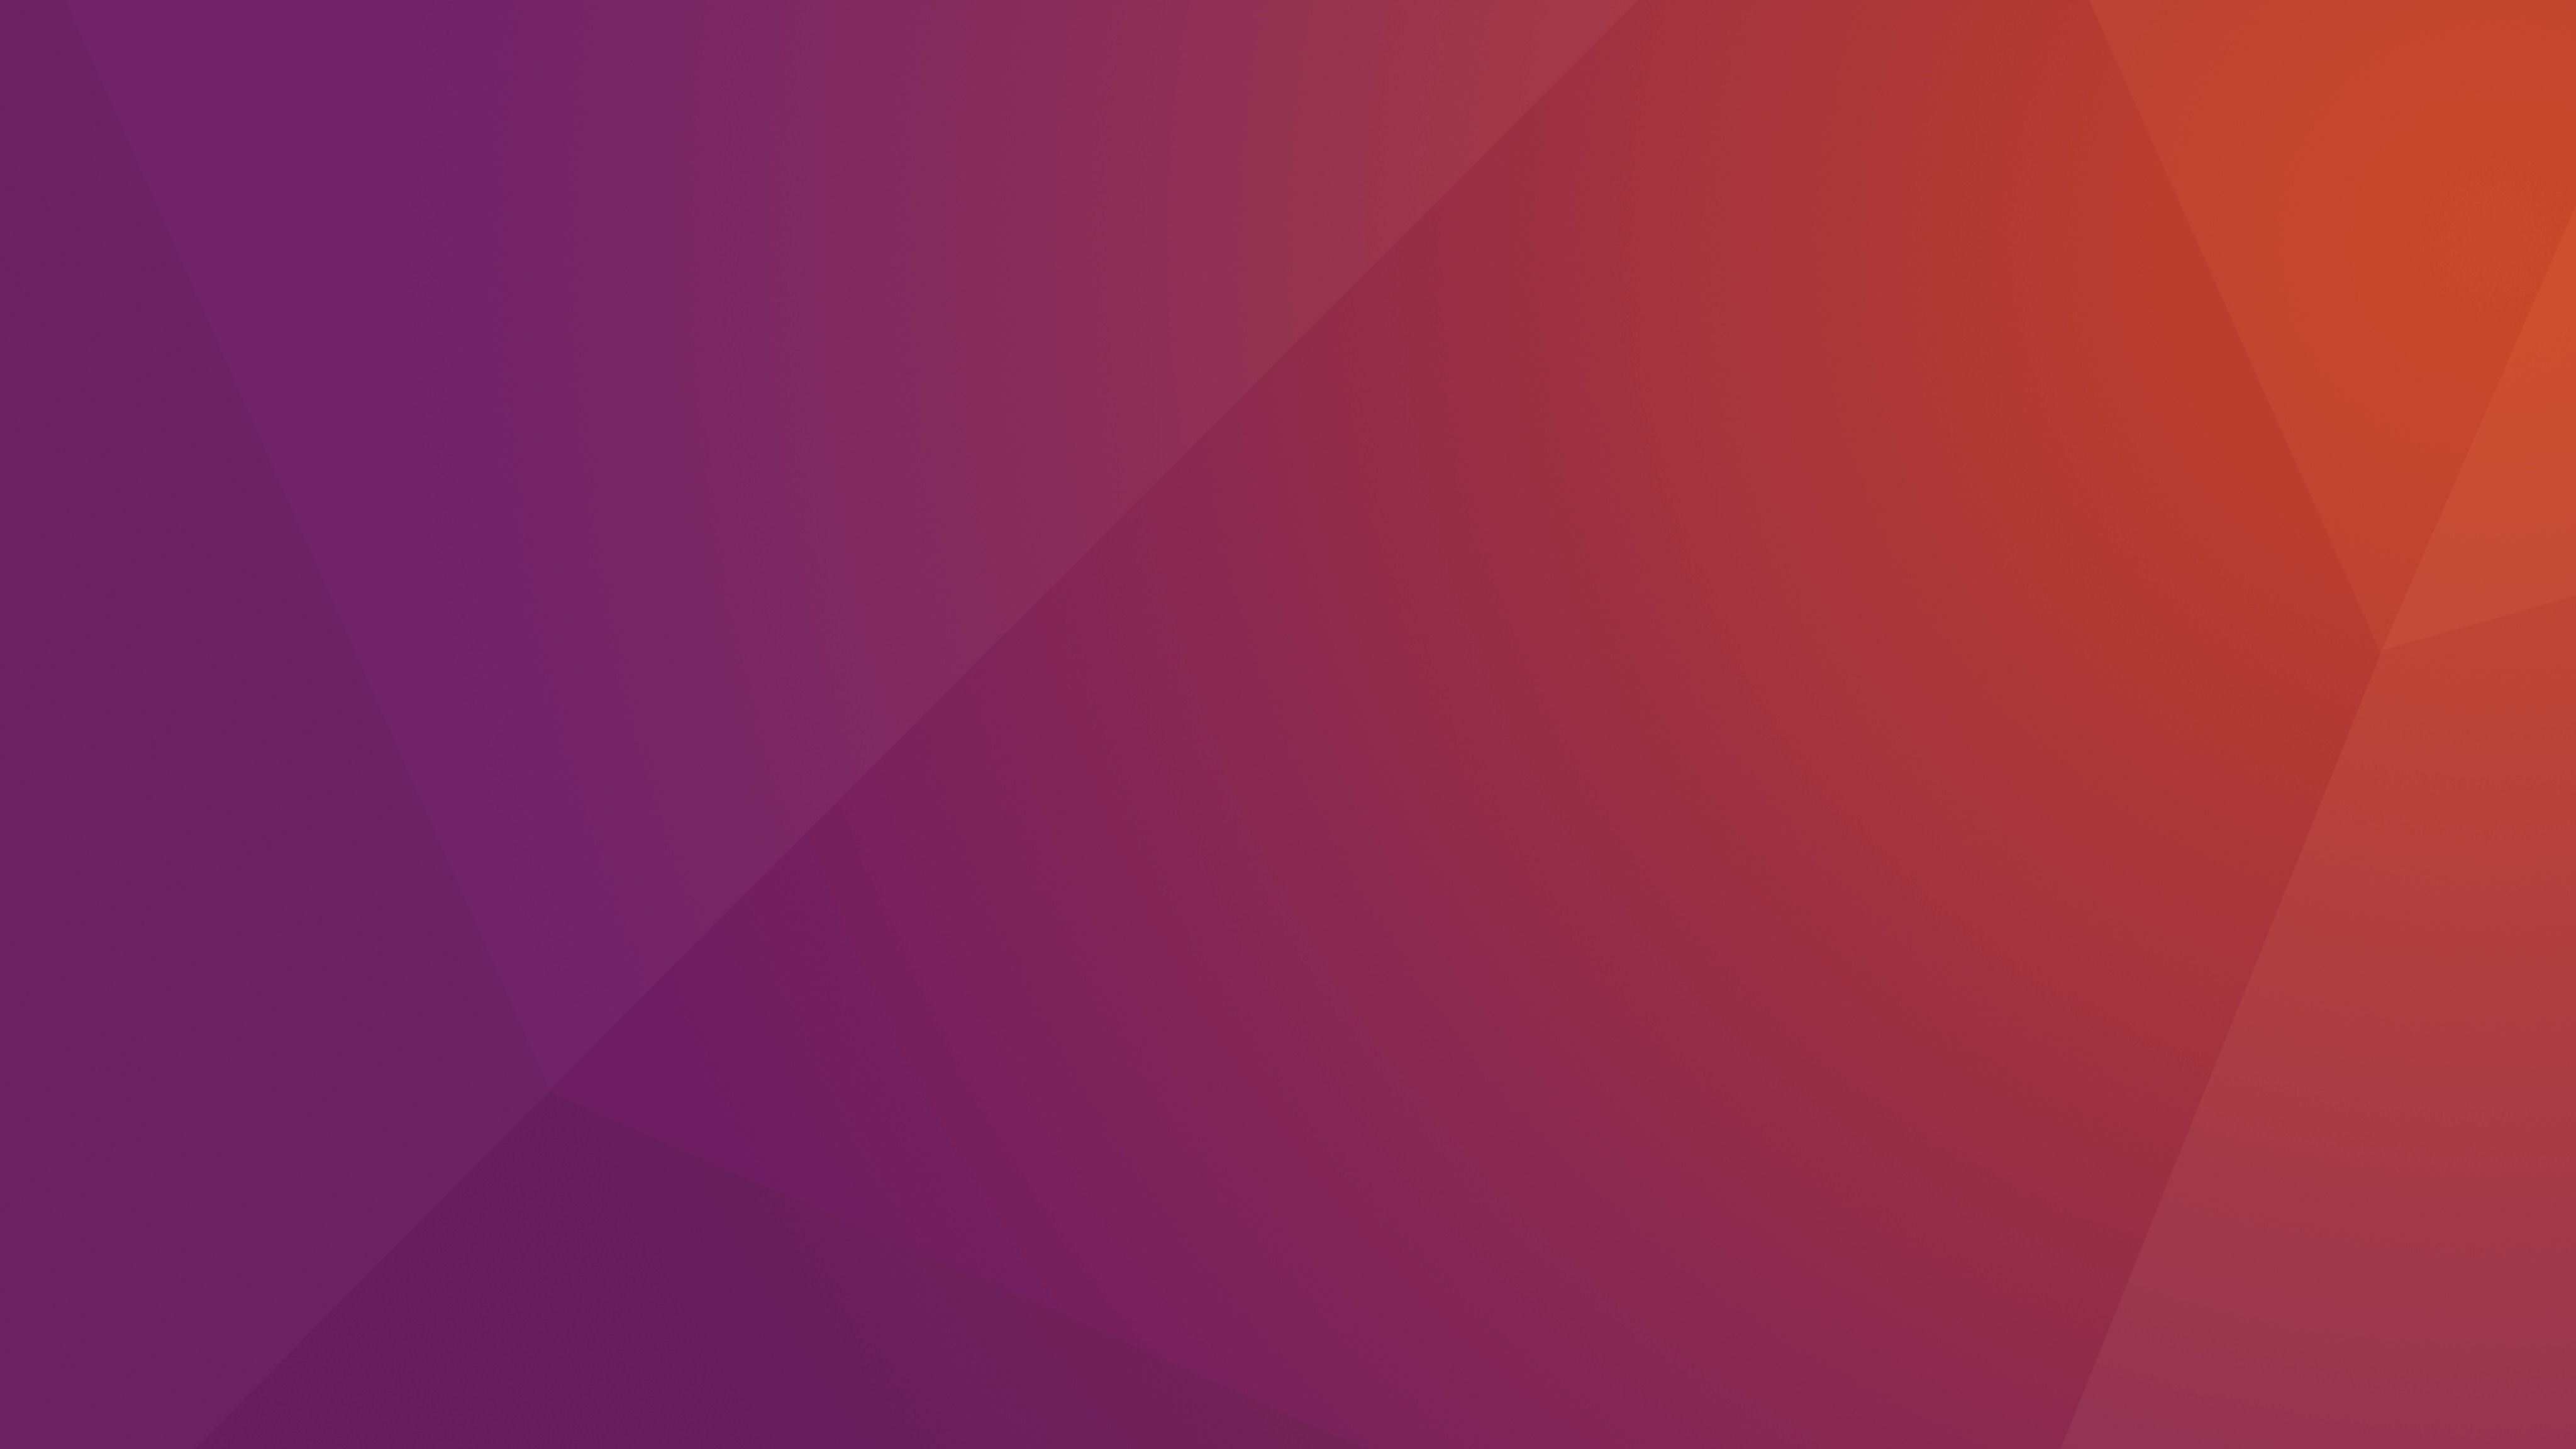 Ubuntuhandbook Tag Archive Wallpaper